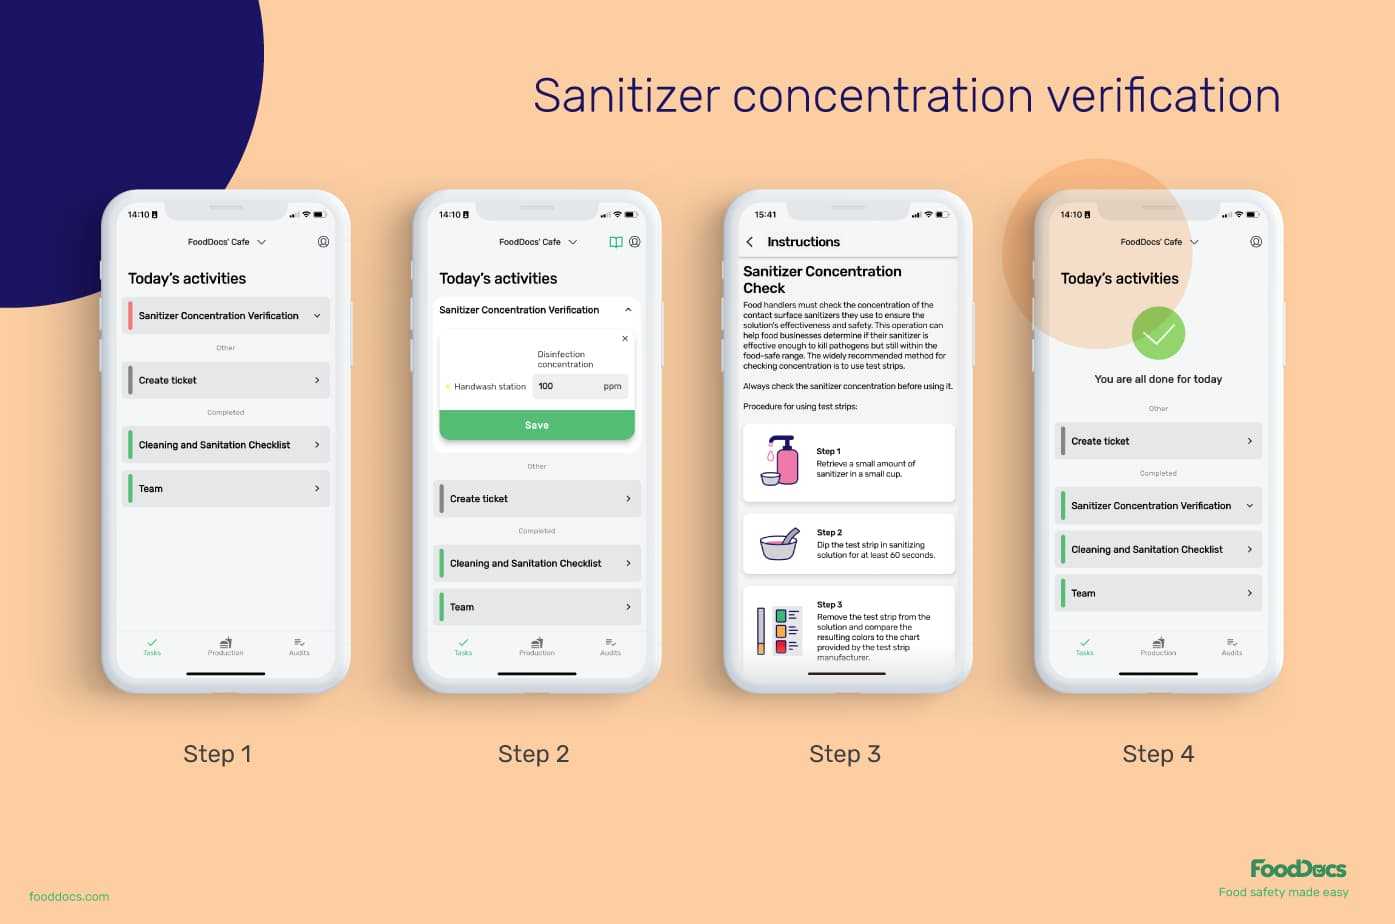 Sanitizer concentration verification log